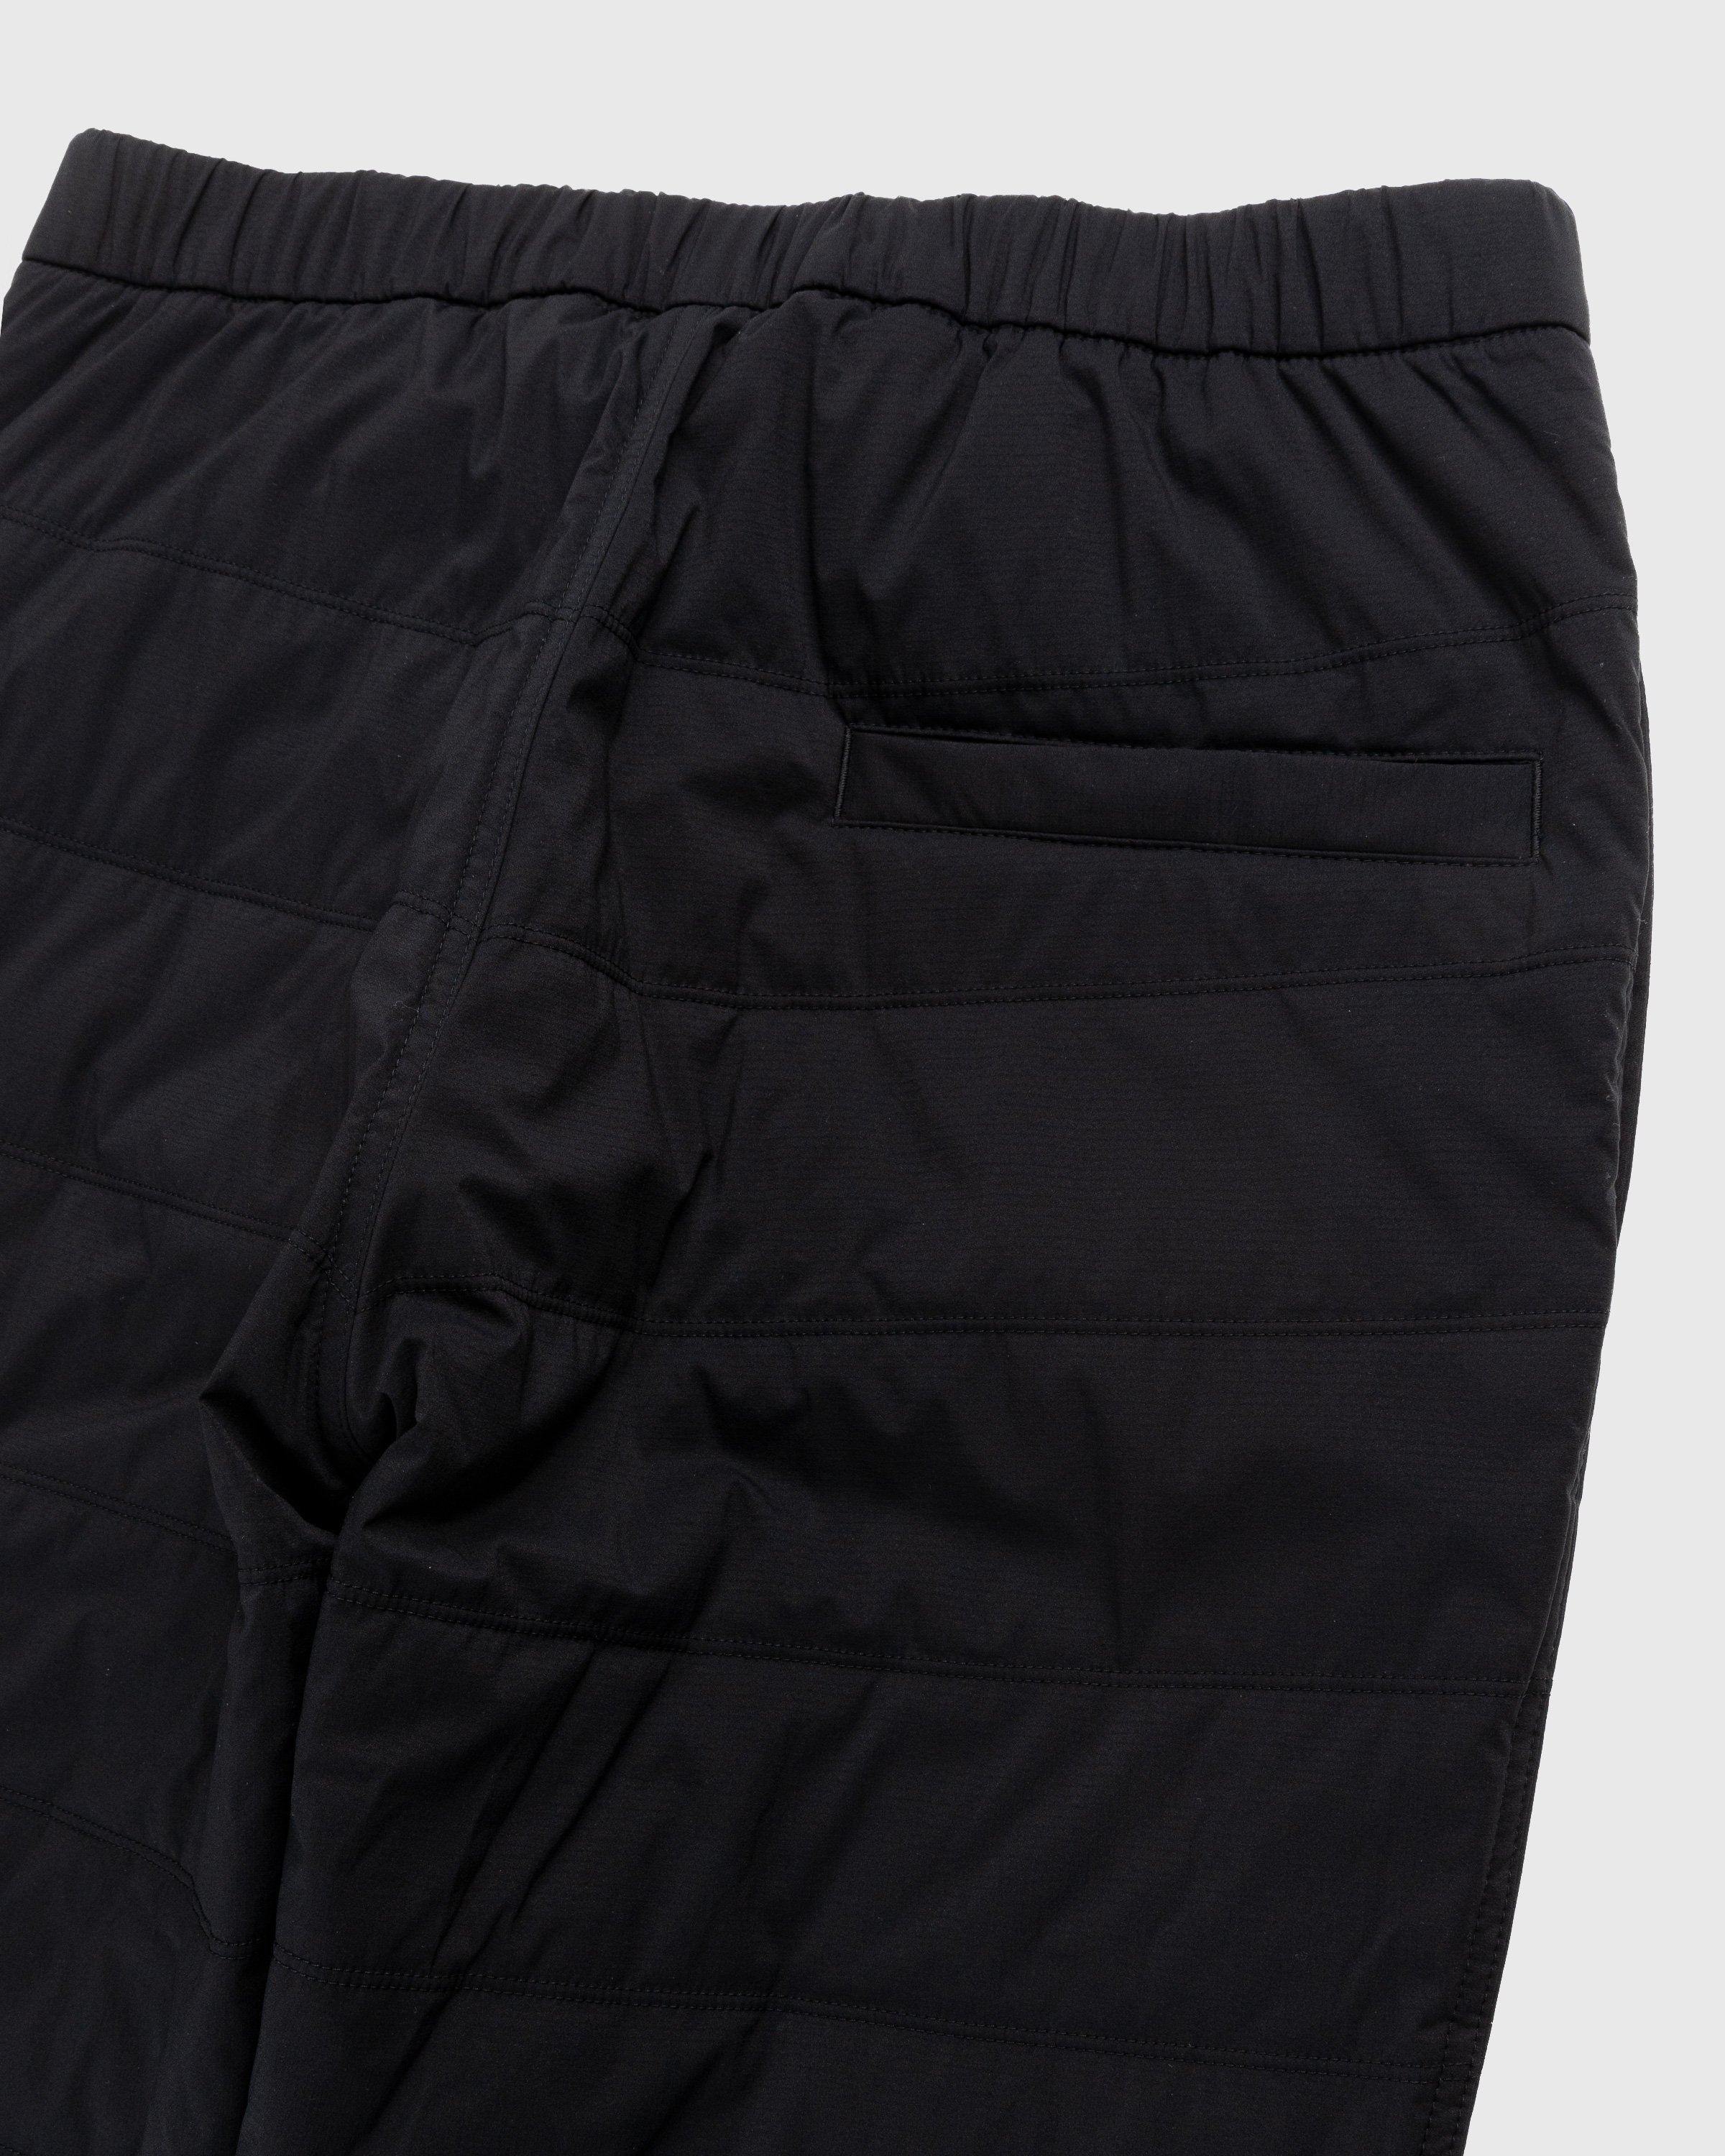 Snow Peak - Flexible Insulated Pants Black - Clothing - Black - Image 3